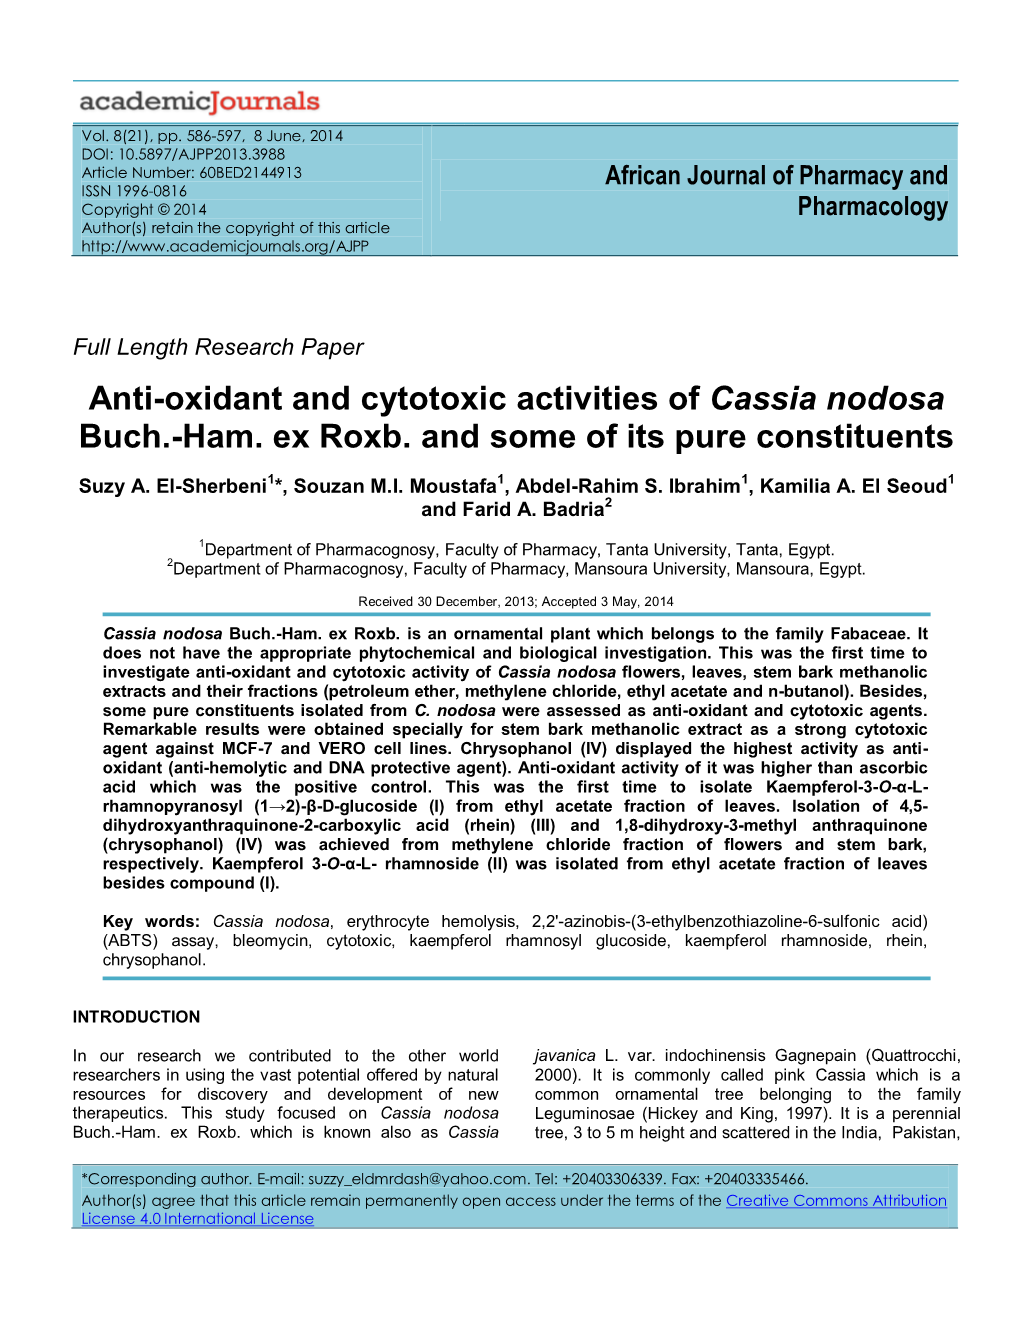 Anti-Oxidant and Cytotoxic Activities of Cassia Nodosa Buch.-Ham